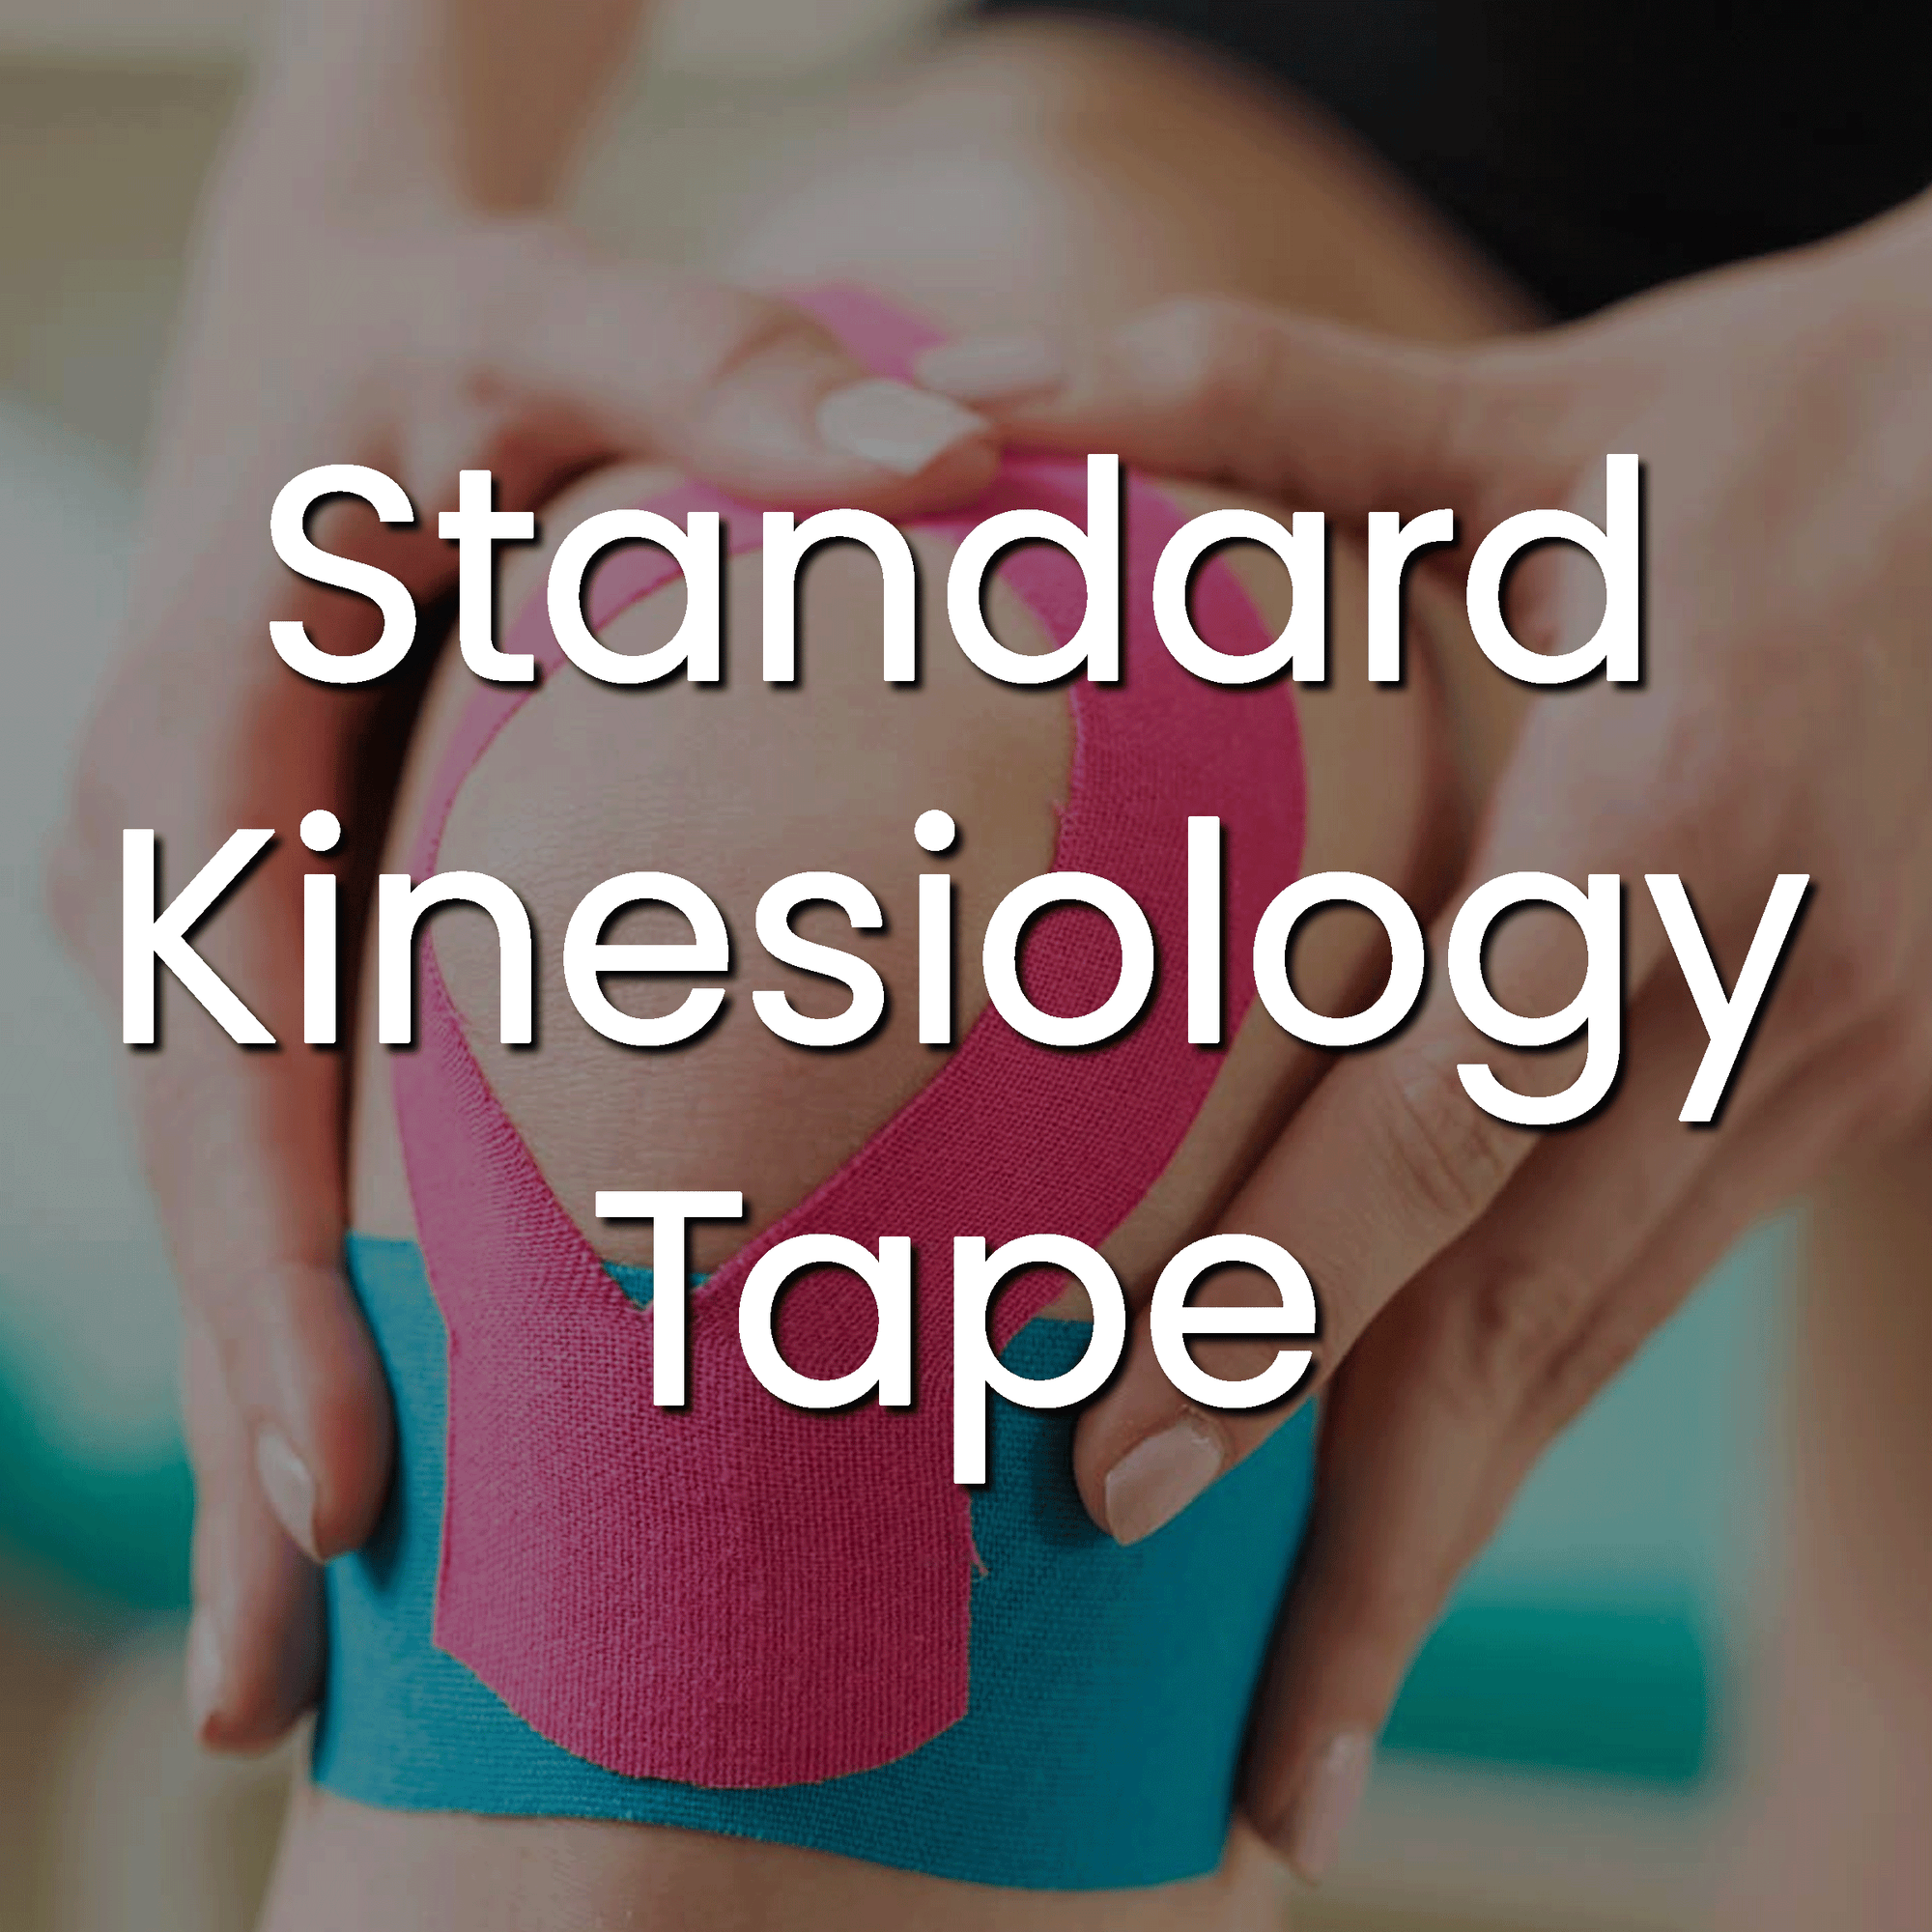 Standard Kinesiology Tape